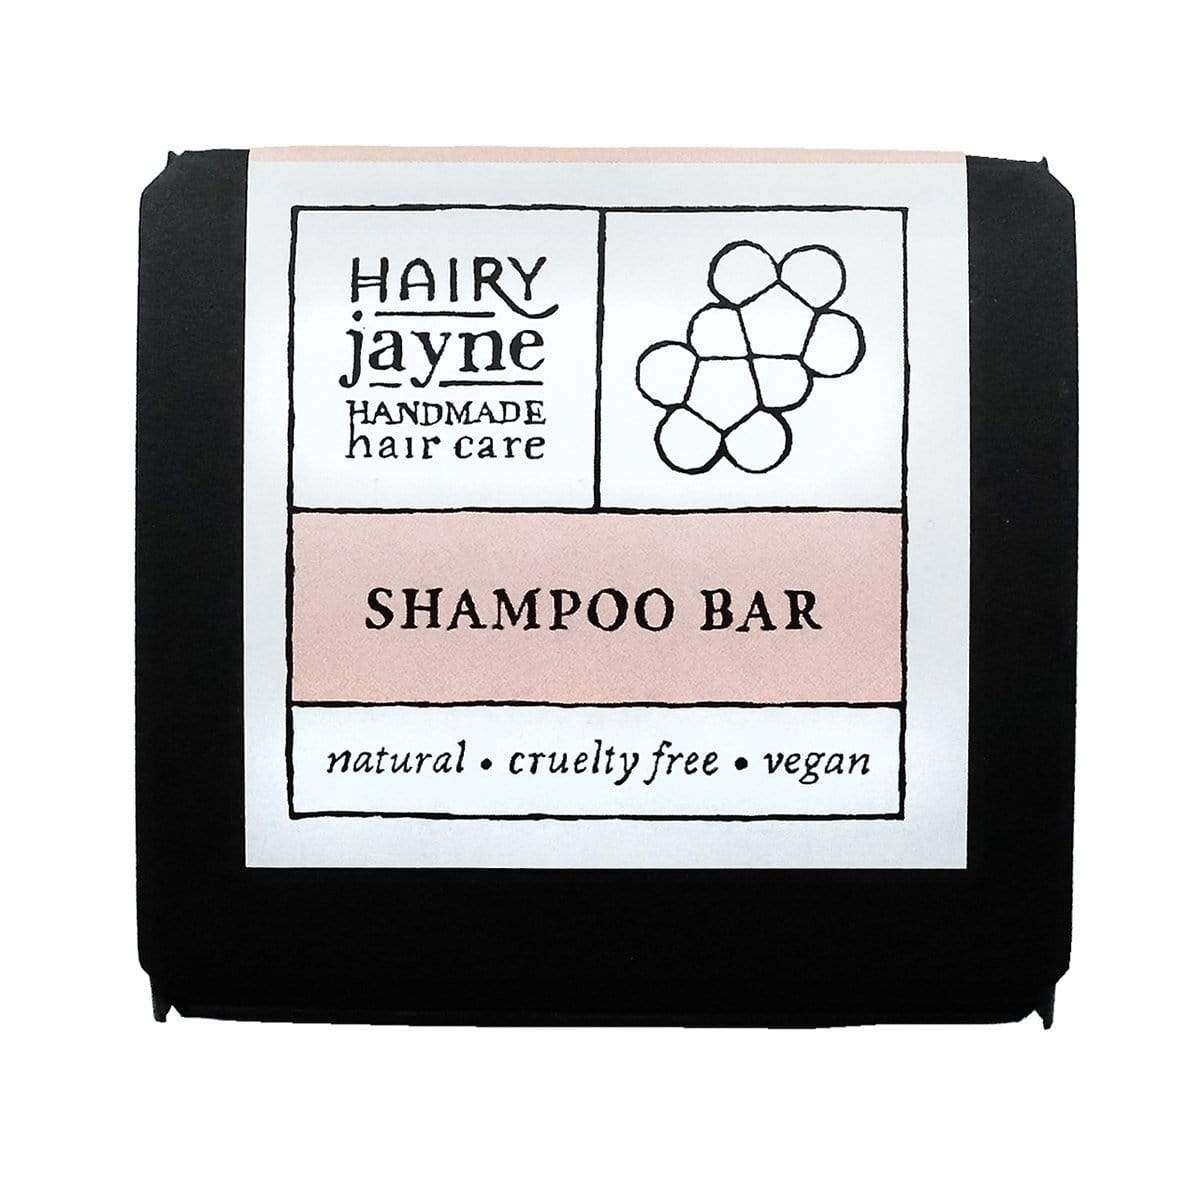 Hairy Jane Haircare Shampoo Bar